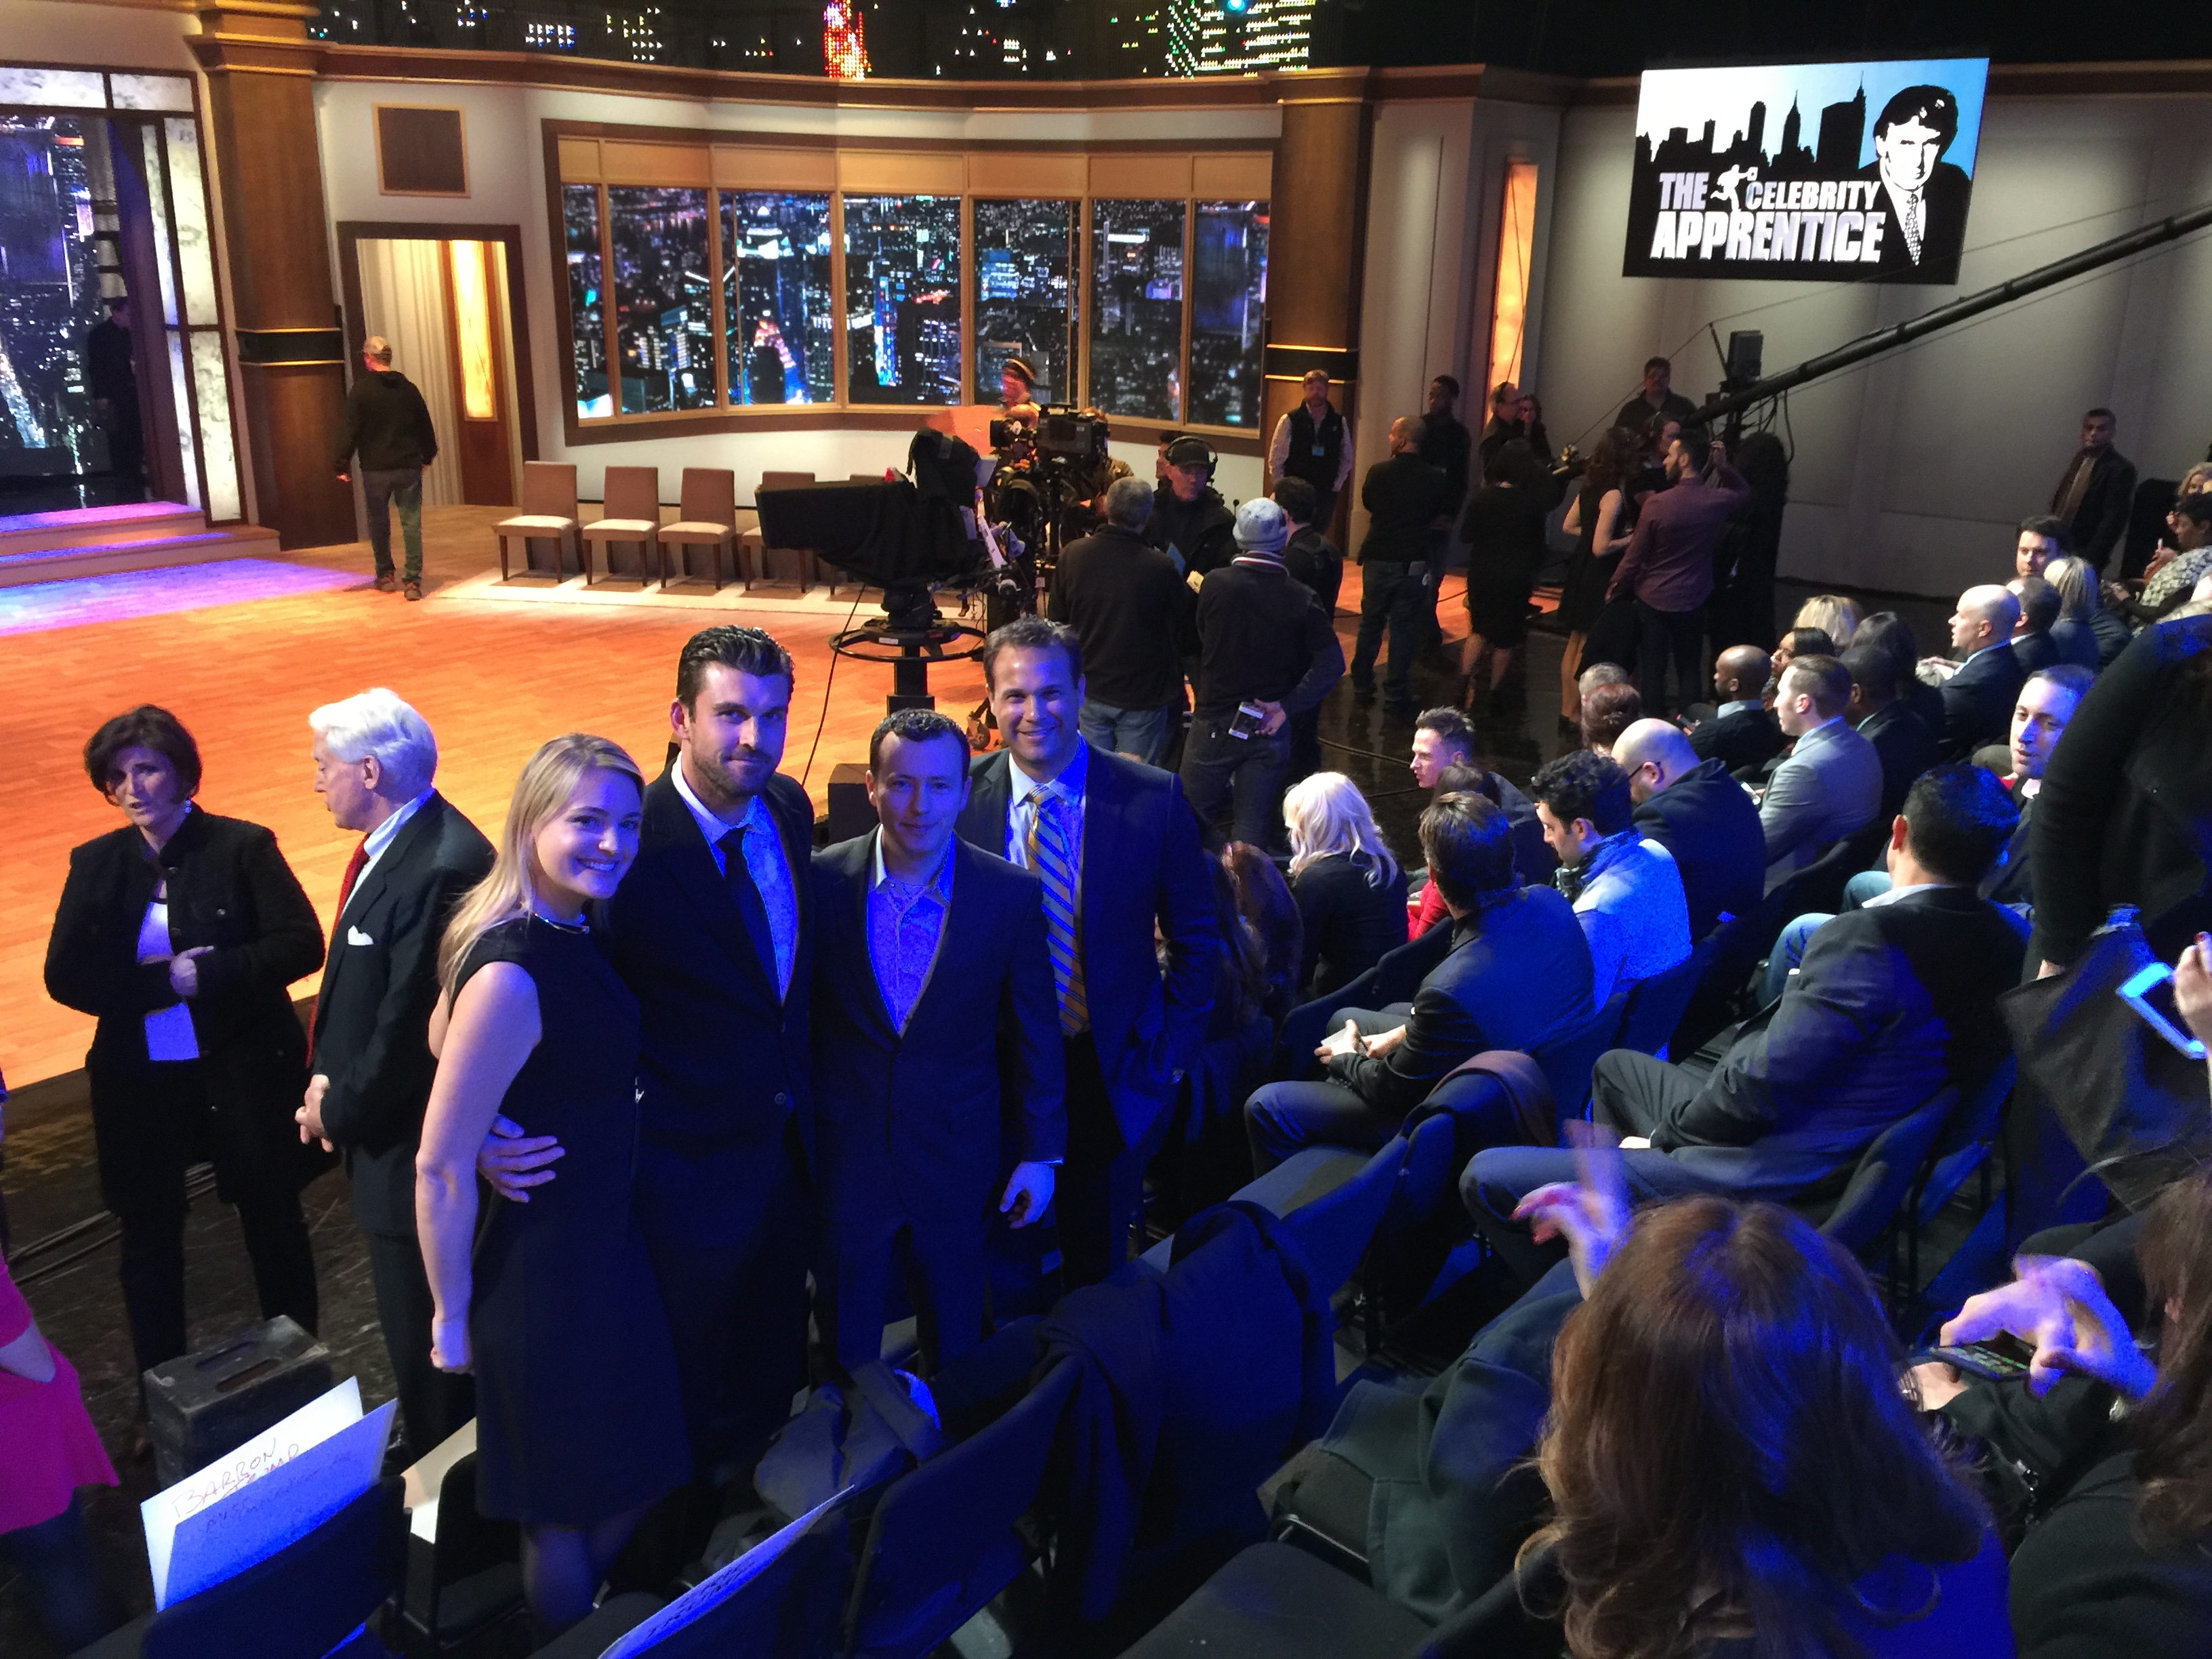 The Celebrity Apprentice Season Finale Live Recording, Rick Nechio and NBC Producers